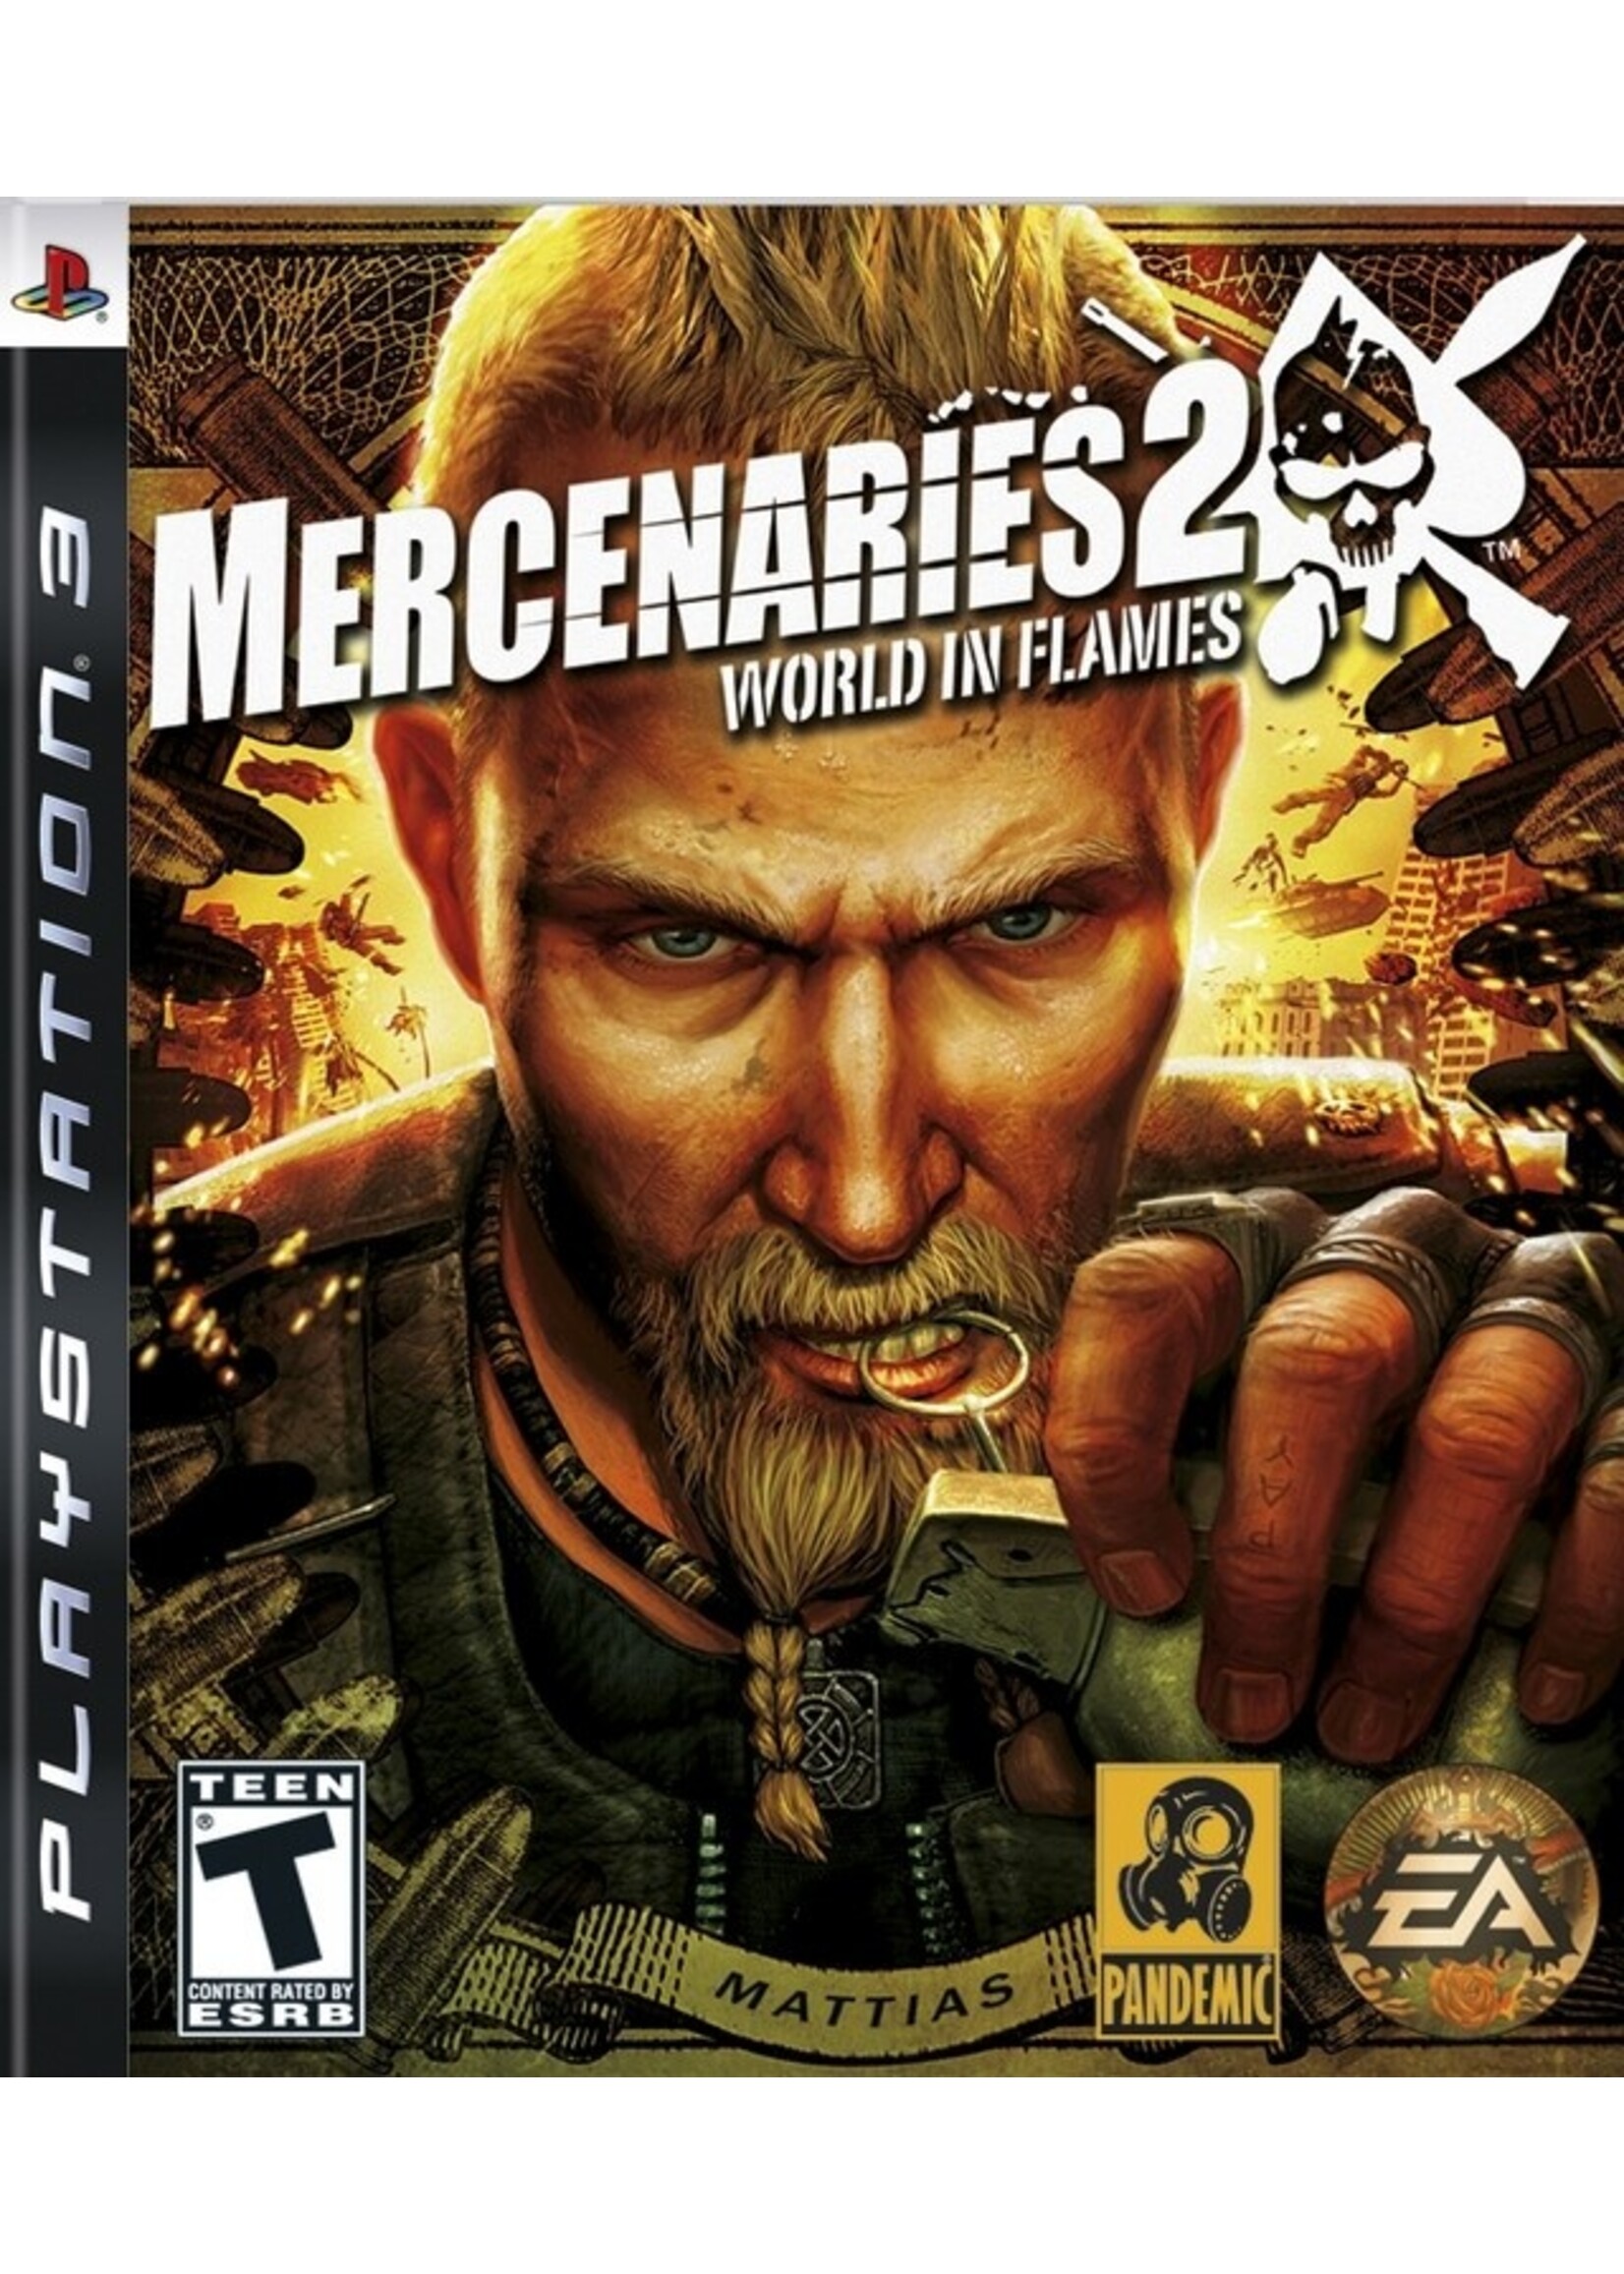 Sony Playstation 3 (PS3) Mercenaries 2 World in Flames